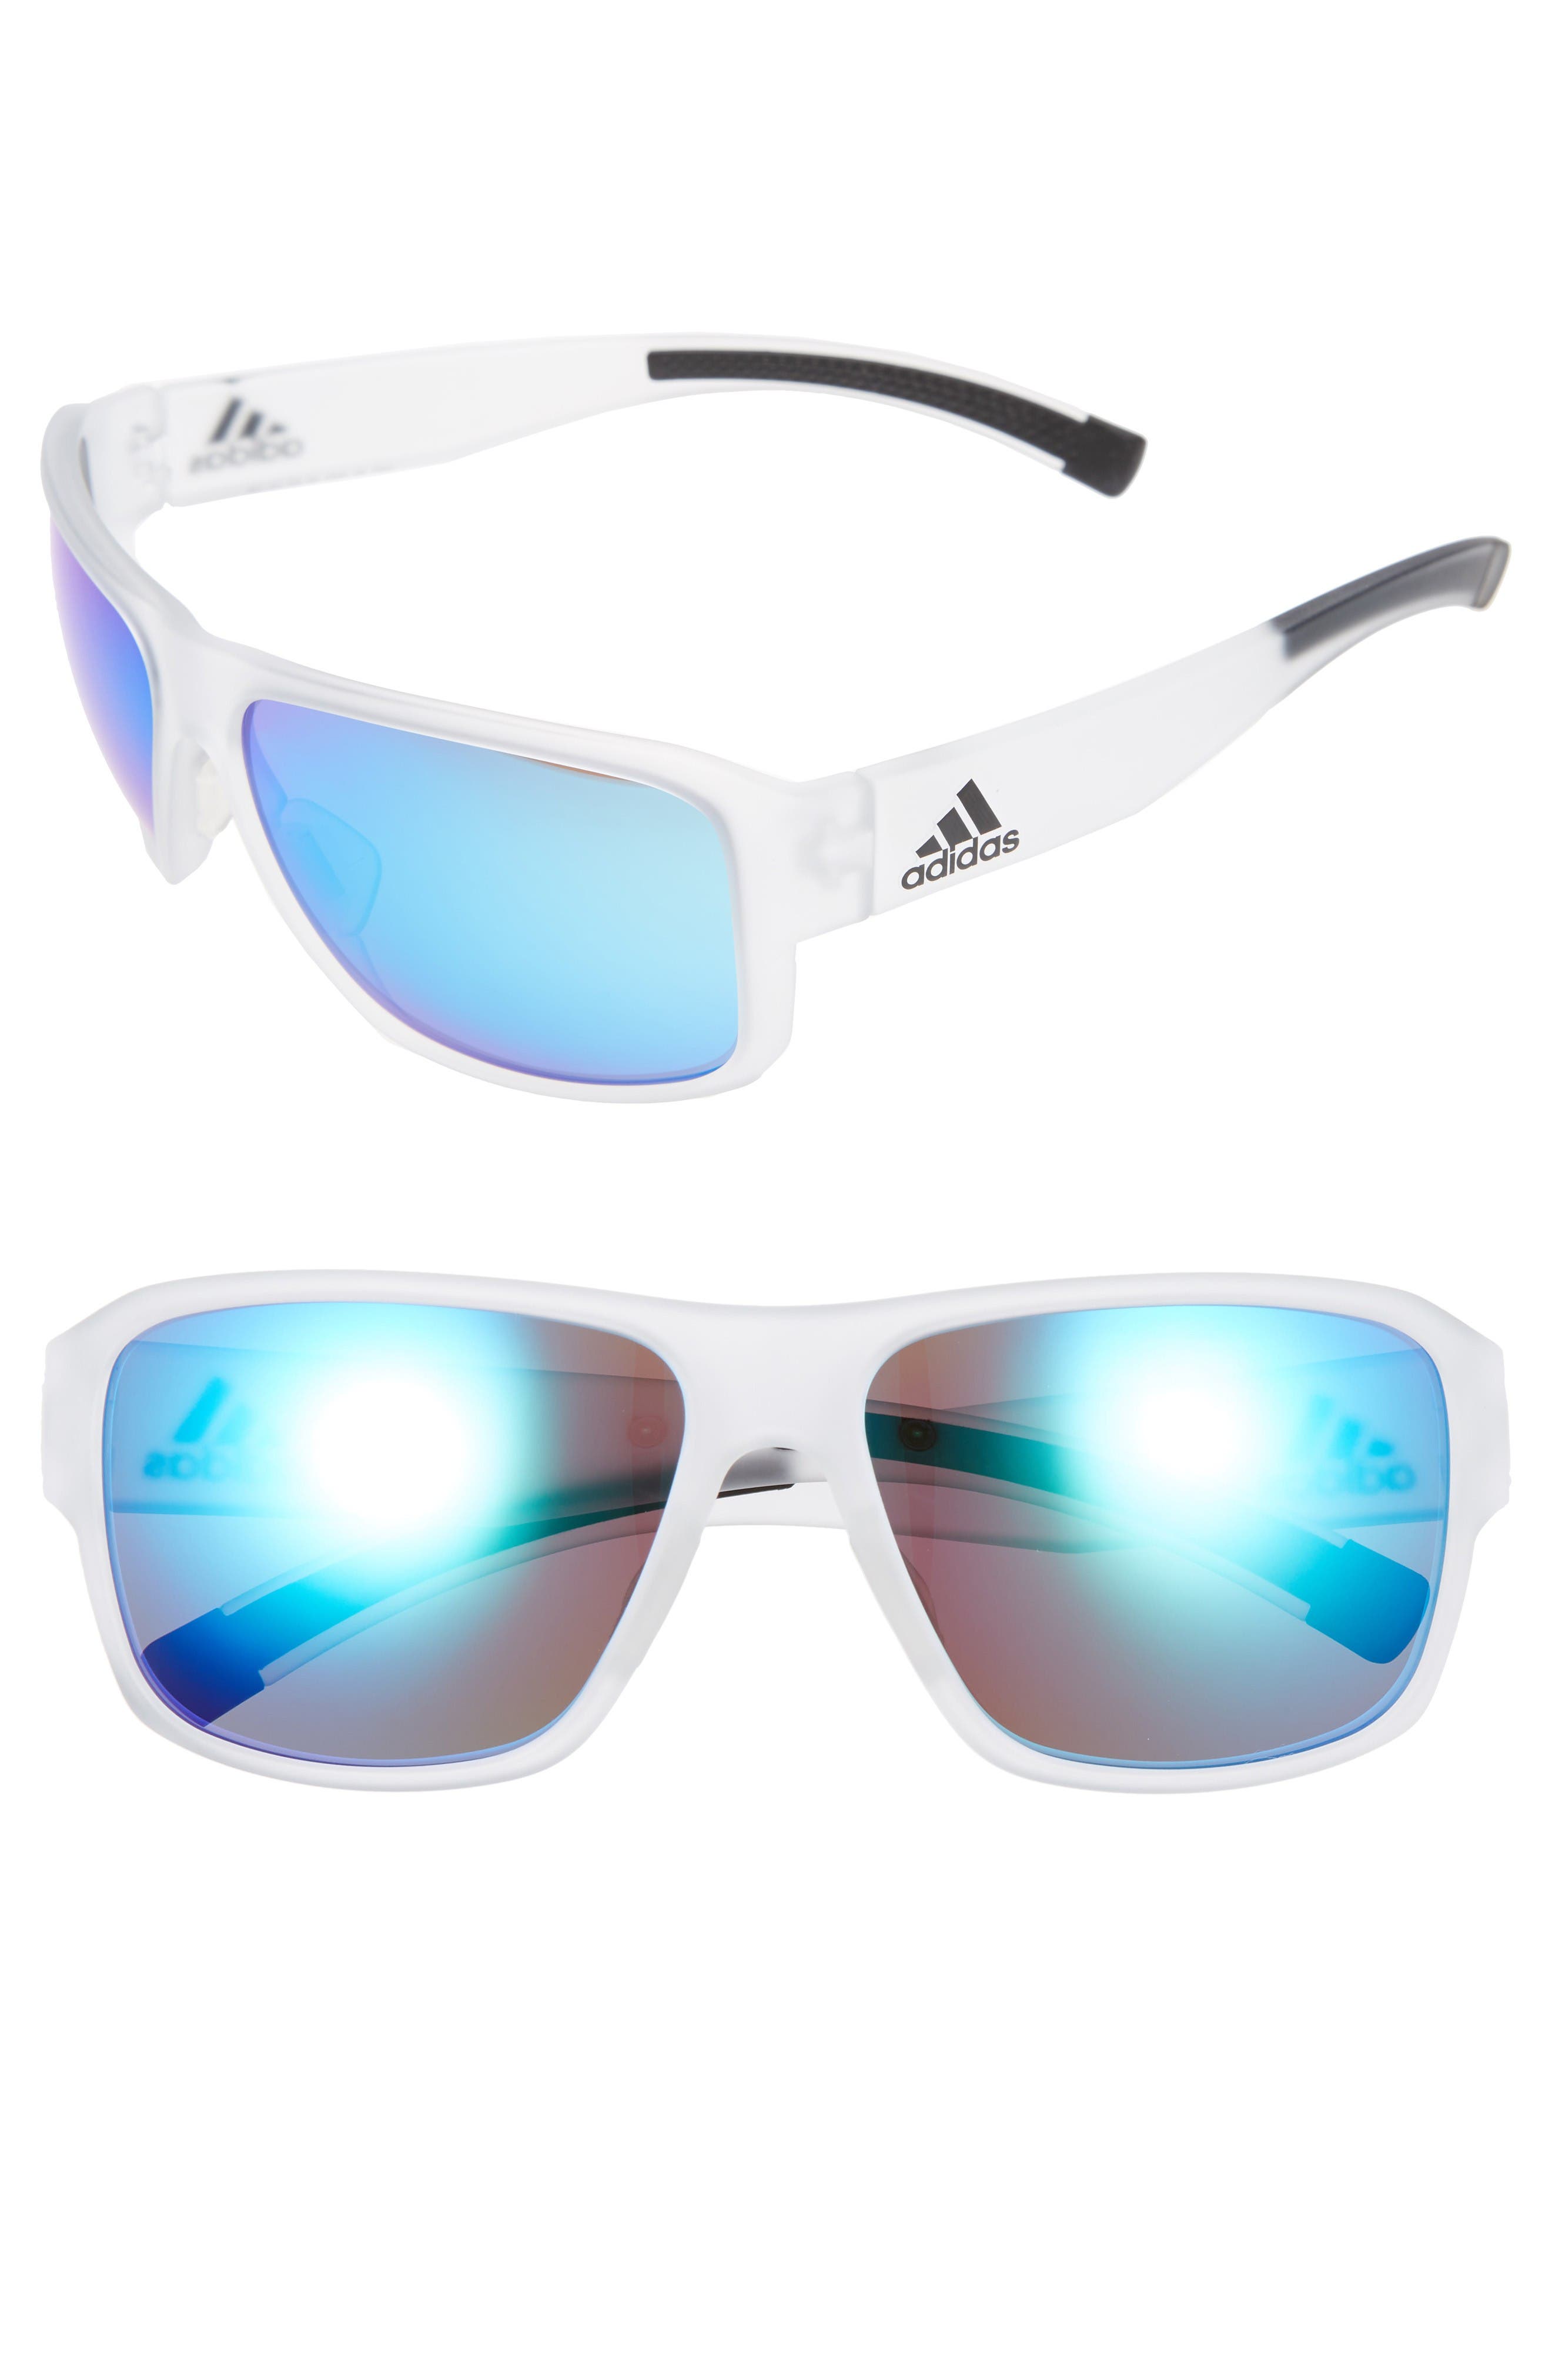 adidas sunglasses womens blue